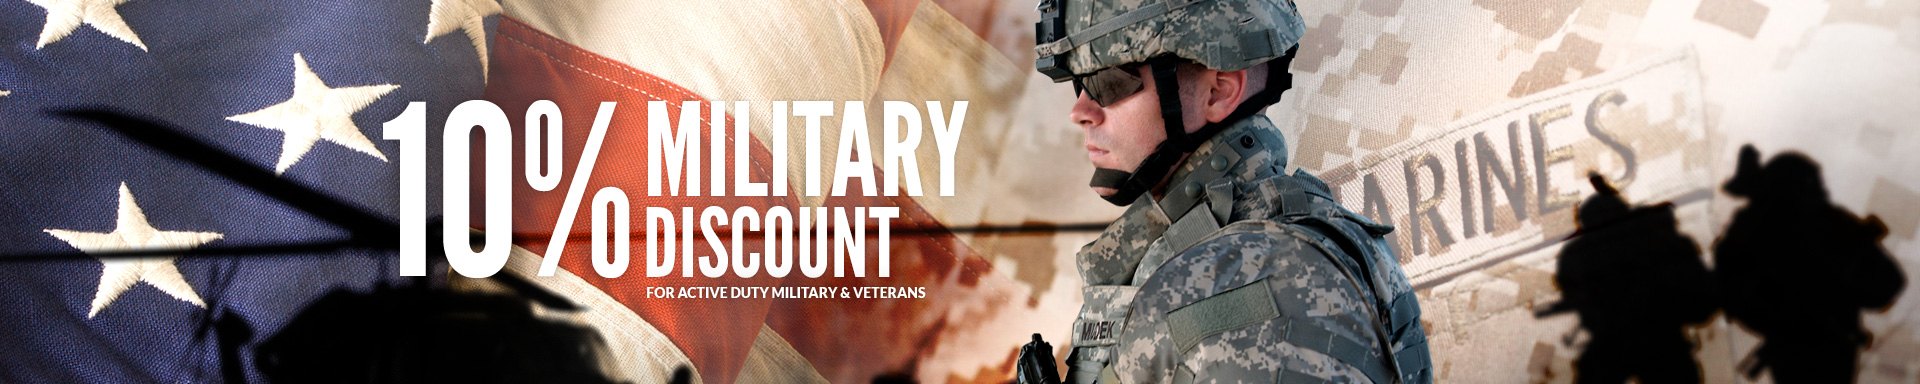 Military Discounts at CARiD.com